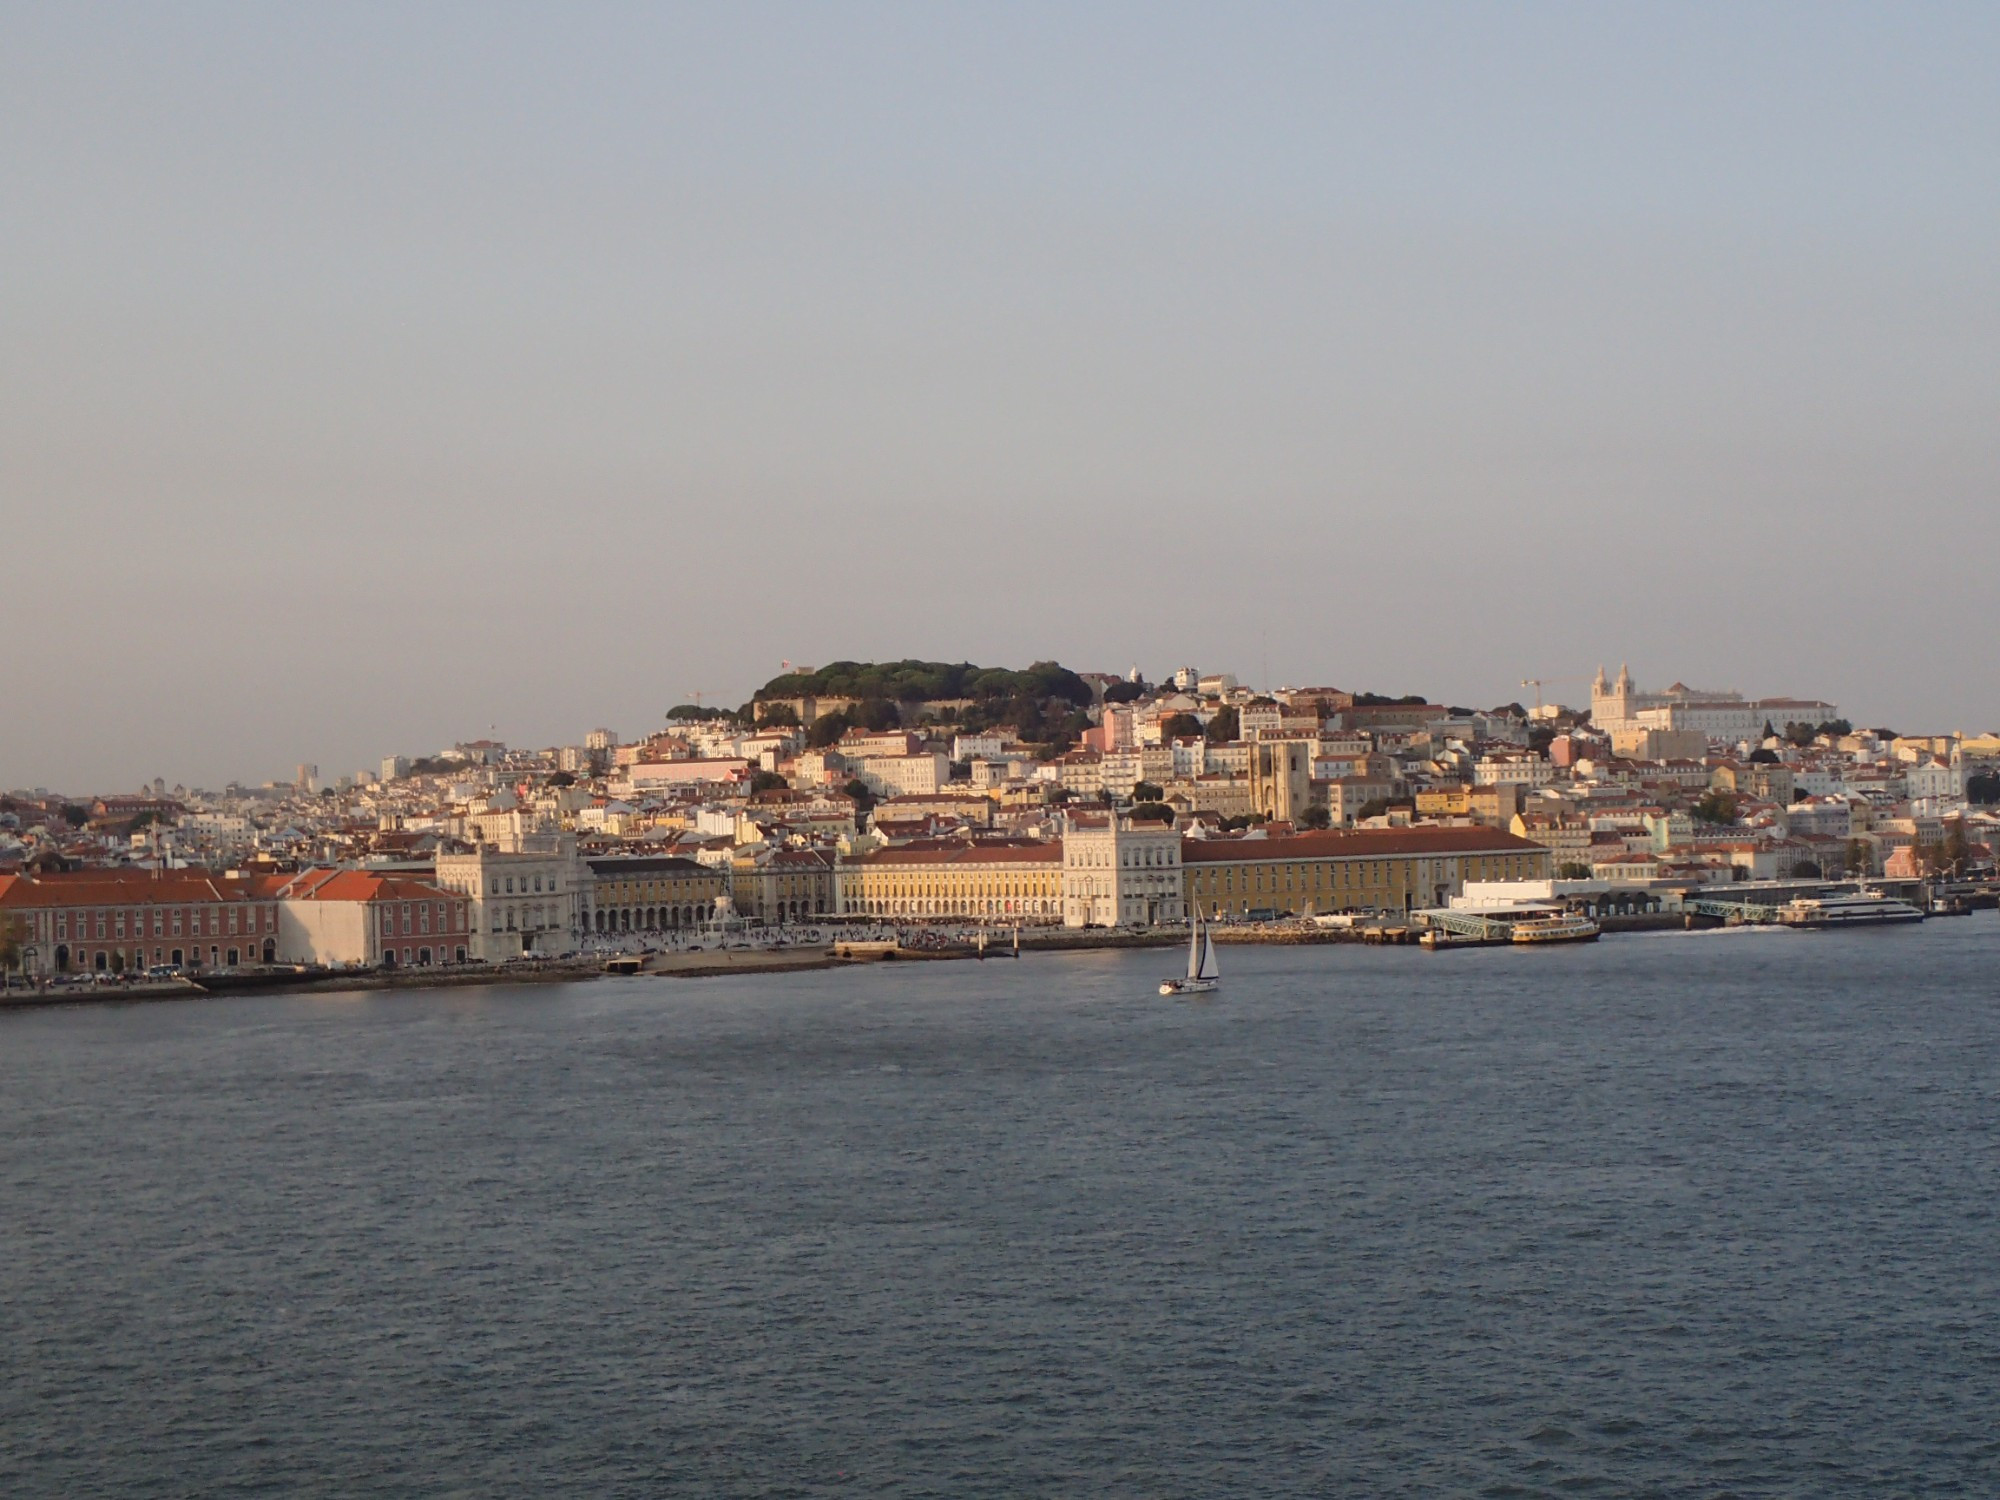 Tagus River at Lisbon, Portugal